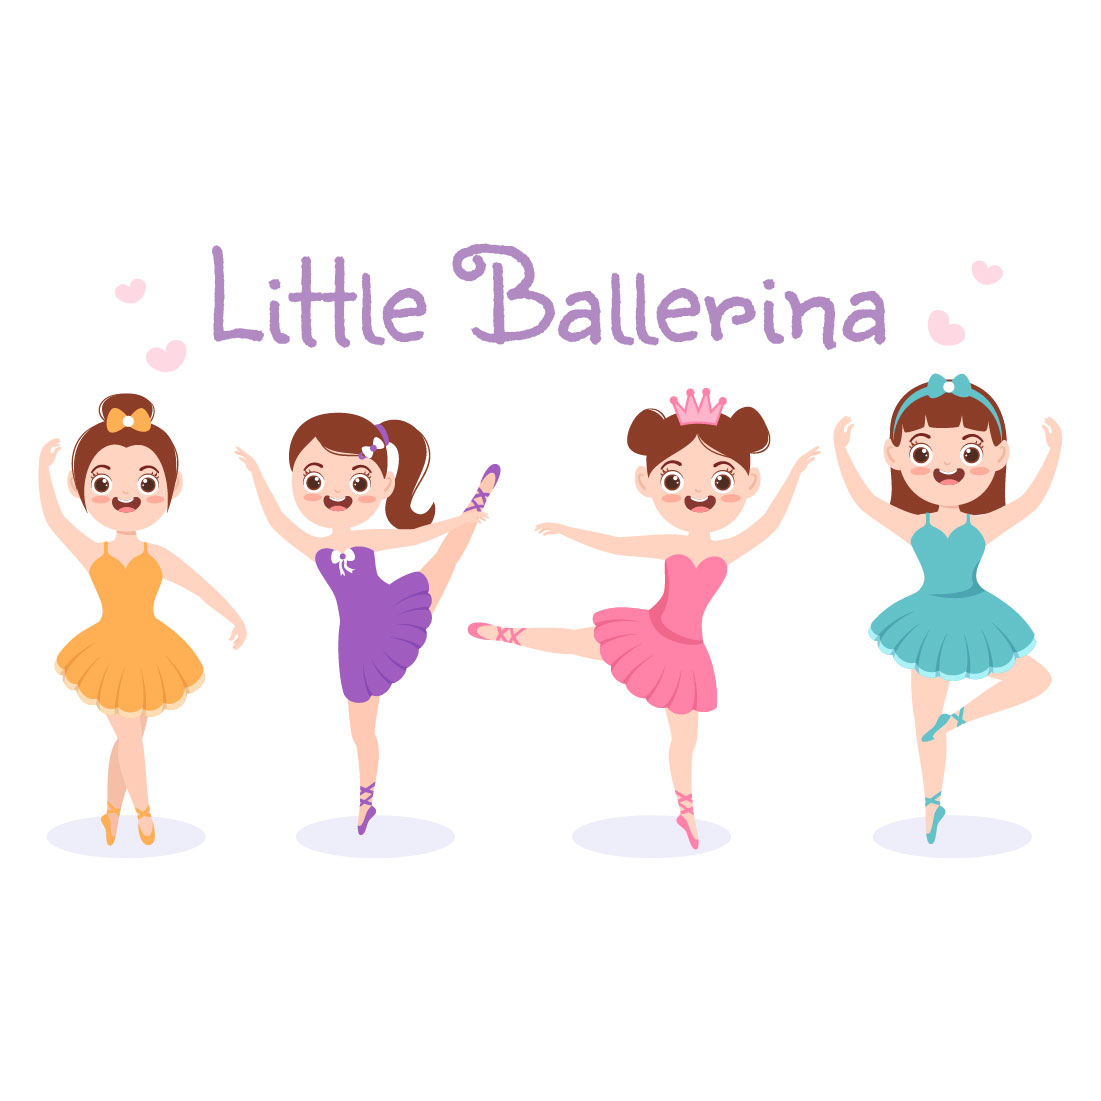 15 Ballet or Ballerina Illustration preview image.